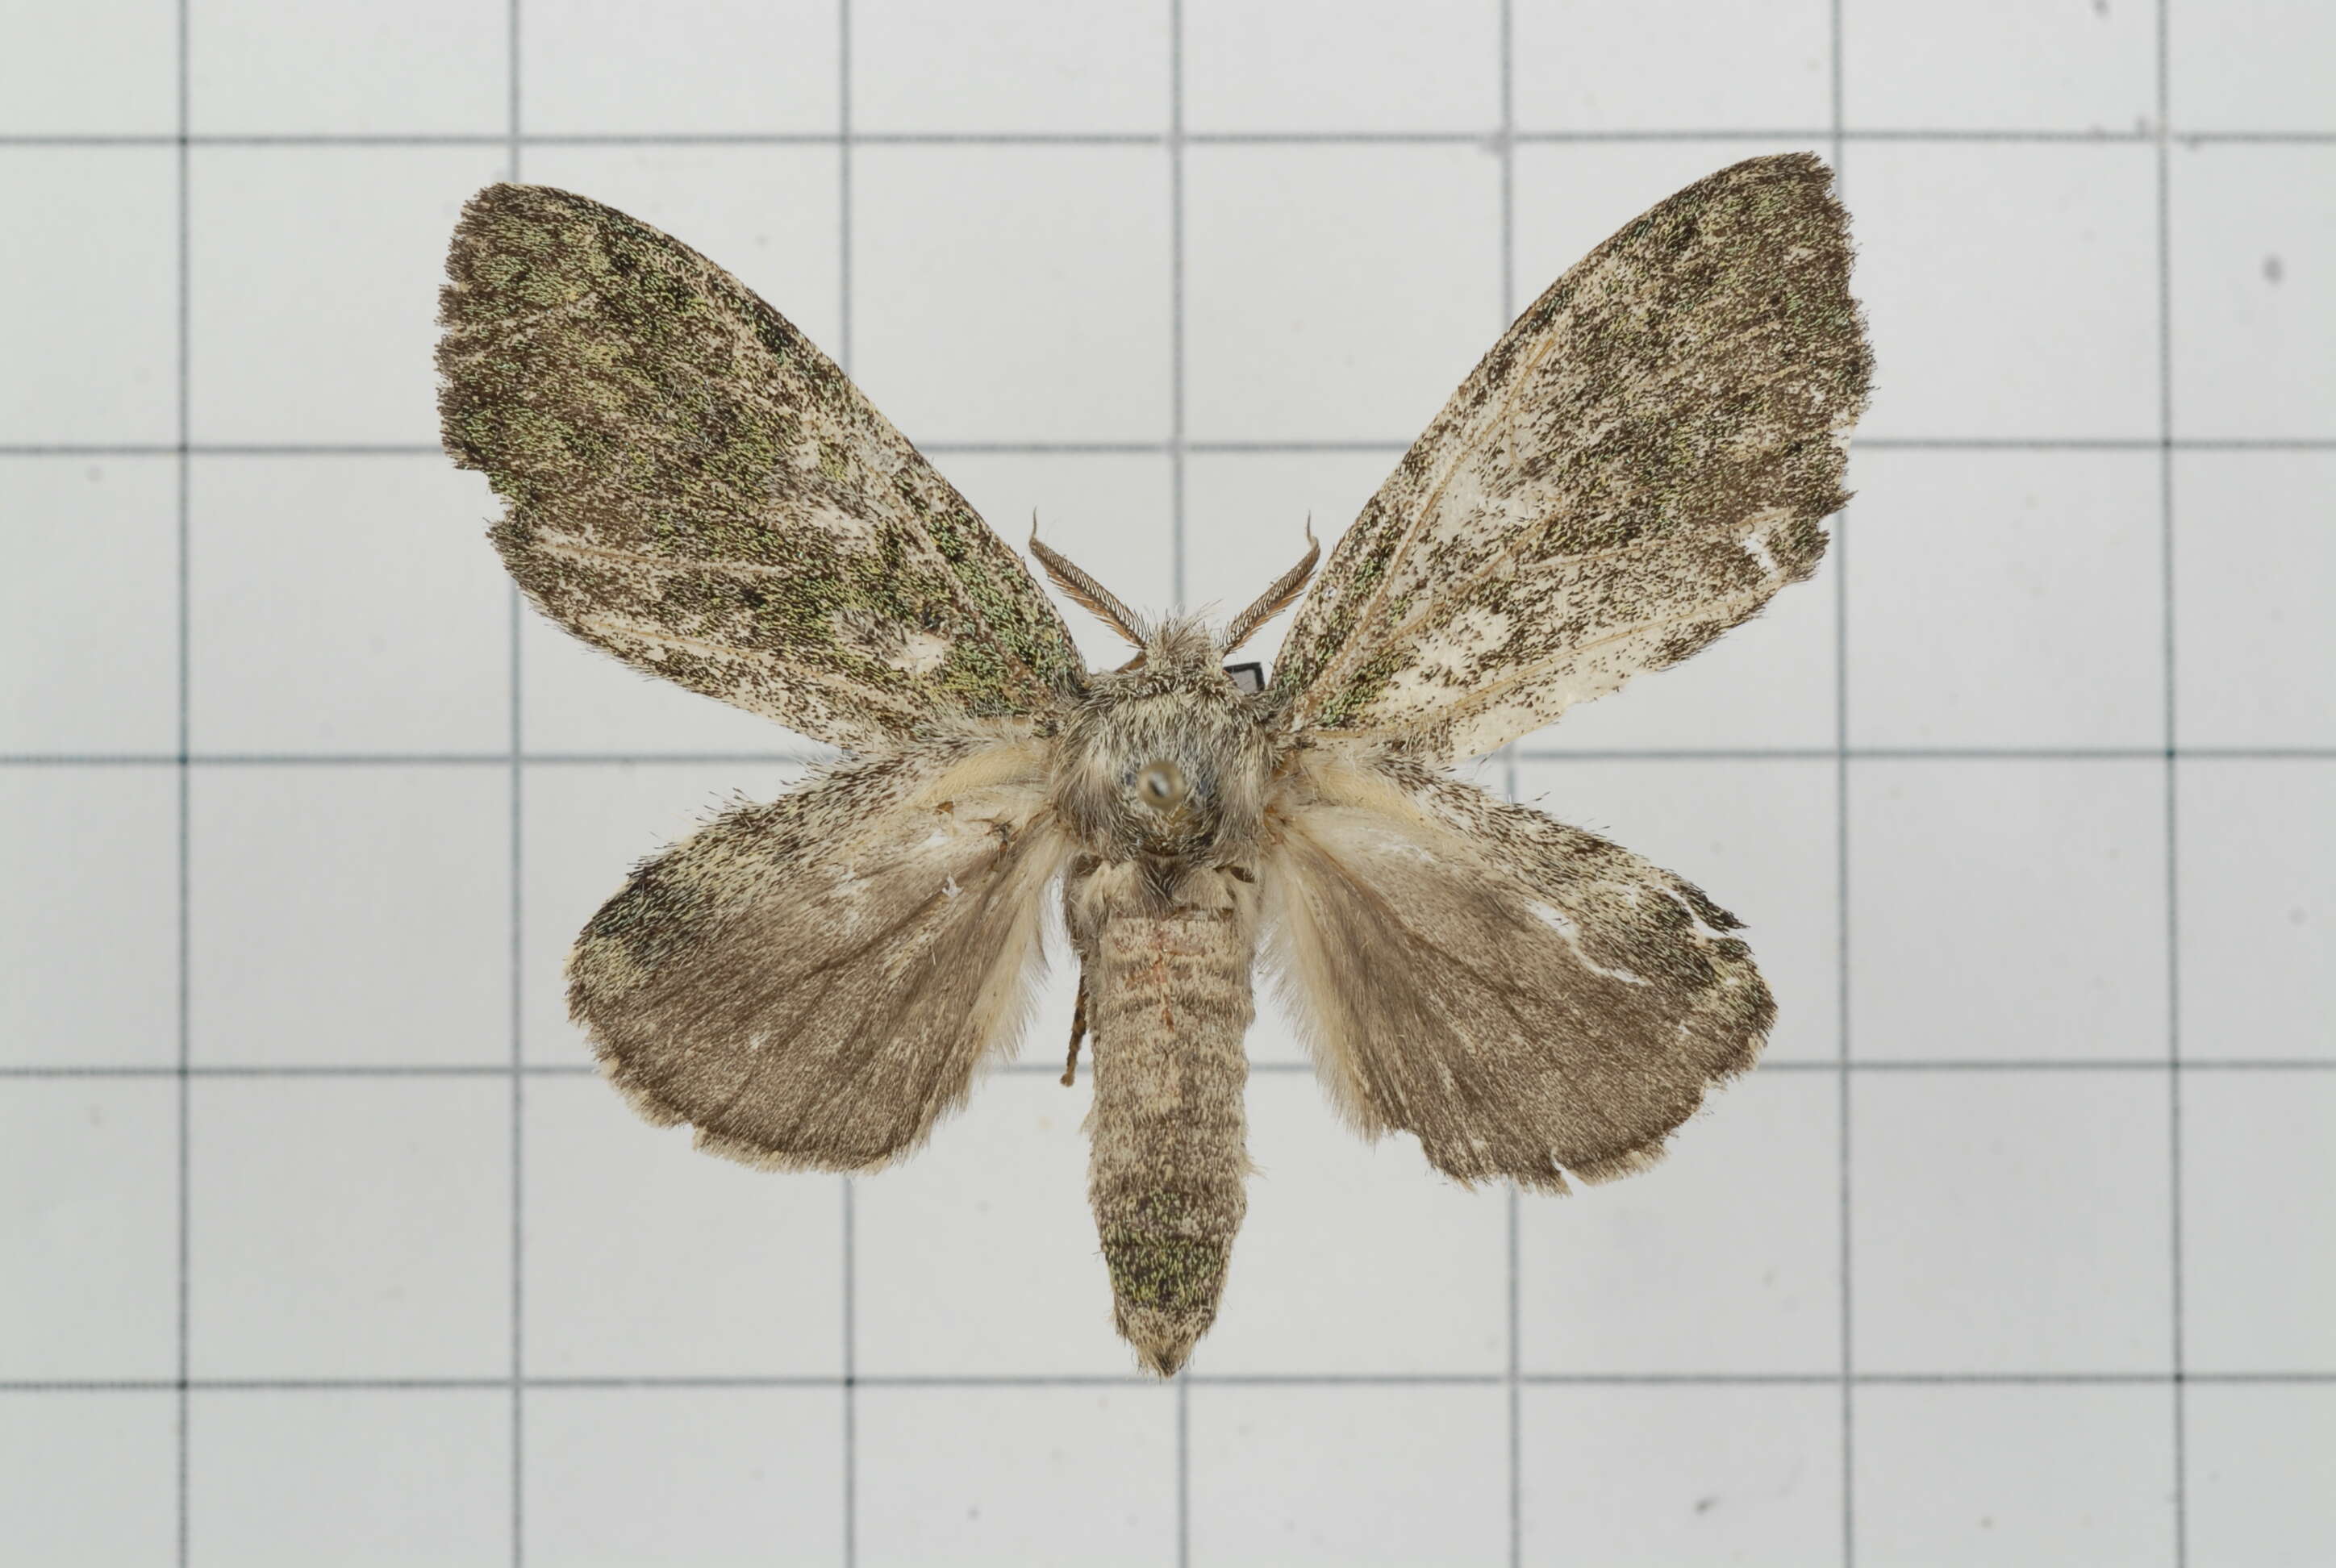 Image of Quadricalcarifera viridipicta Wileman 1910